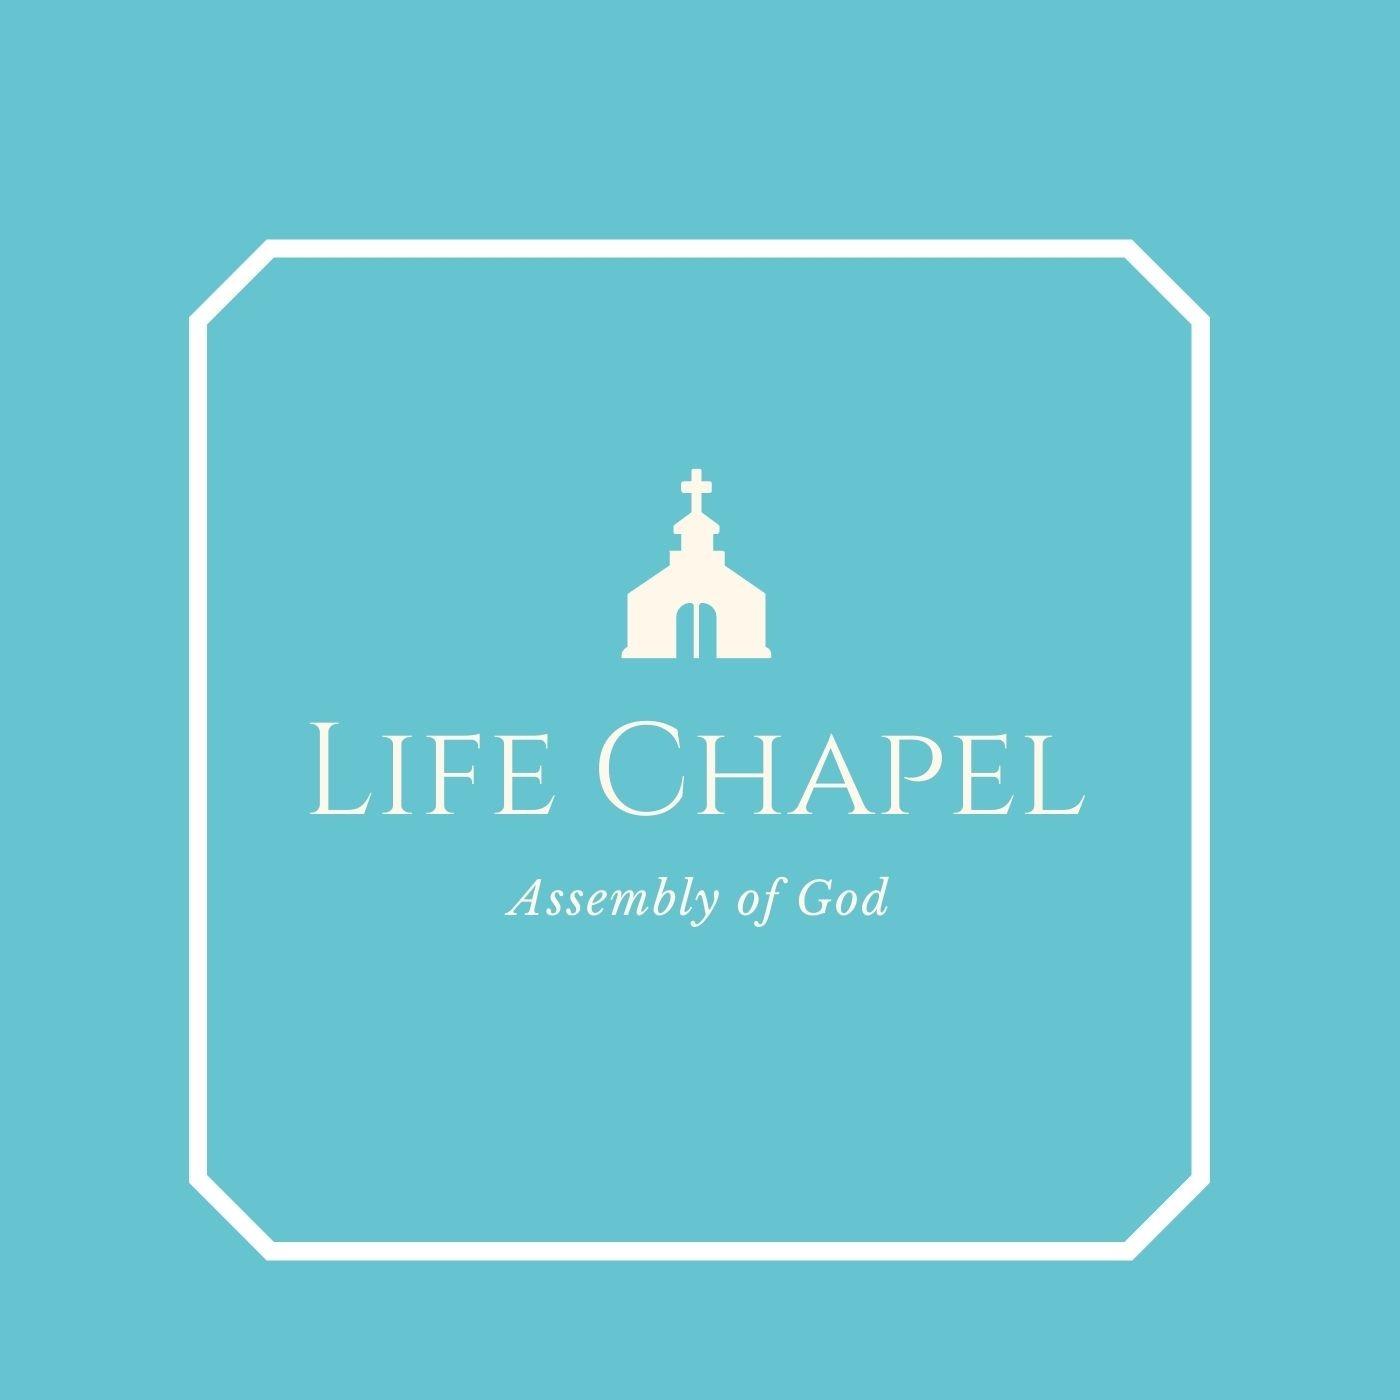 Life Chapel: Assembly of God